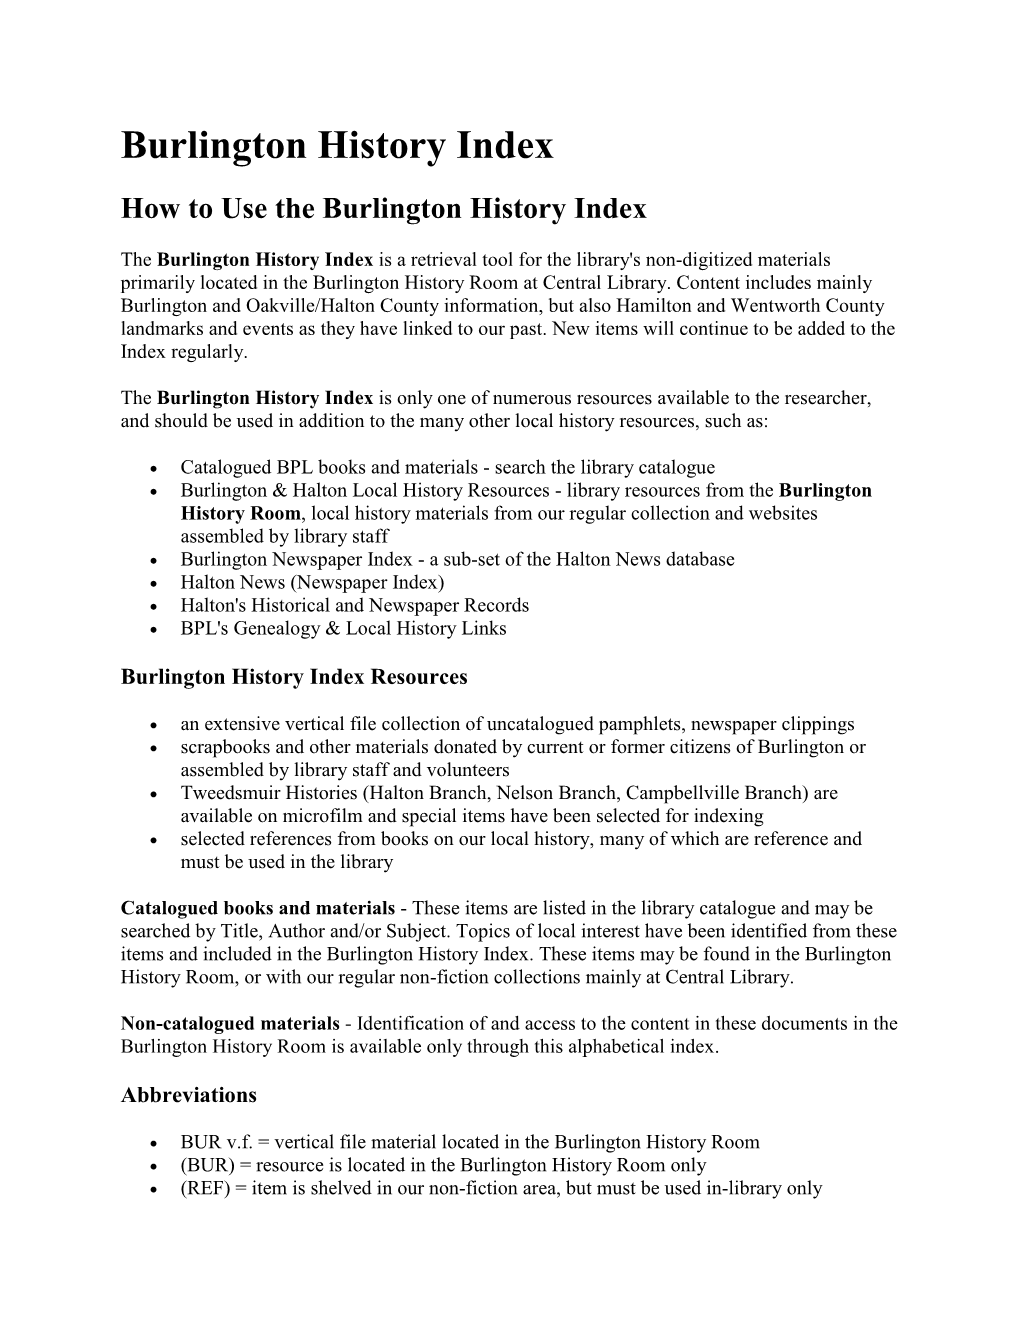 Burlington History Index How to Use the Burlington History Index